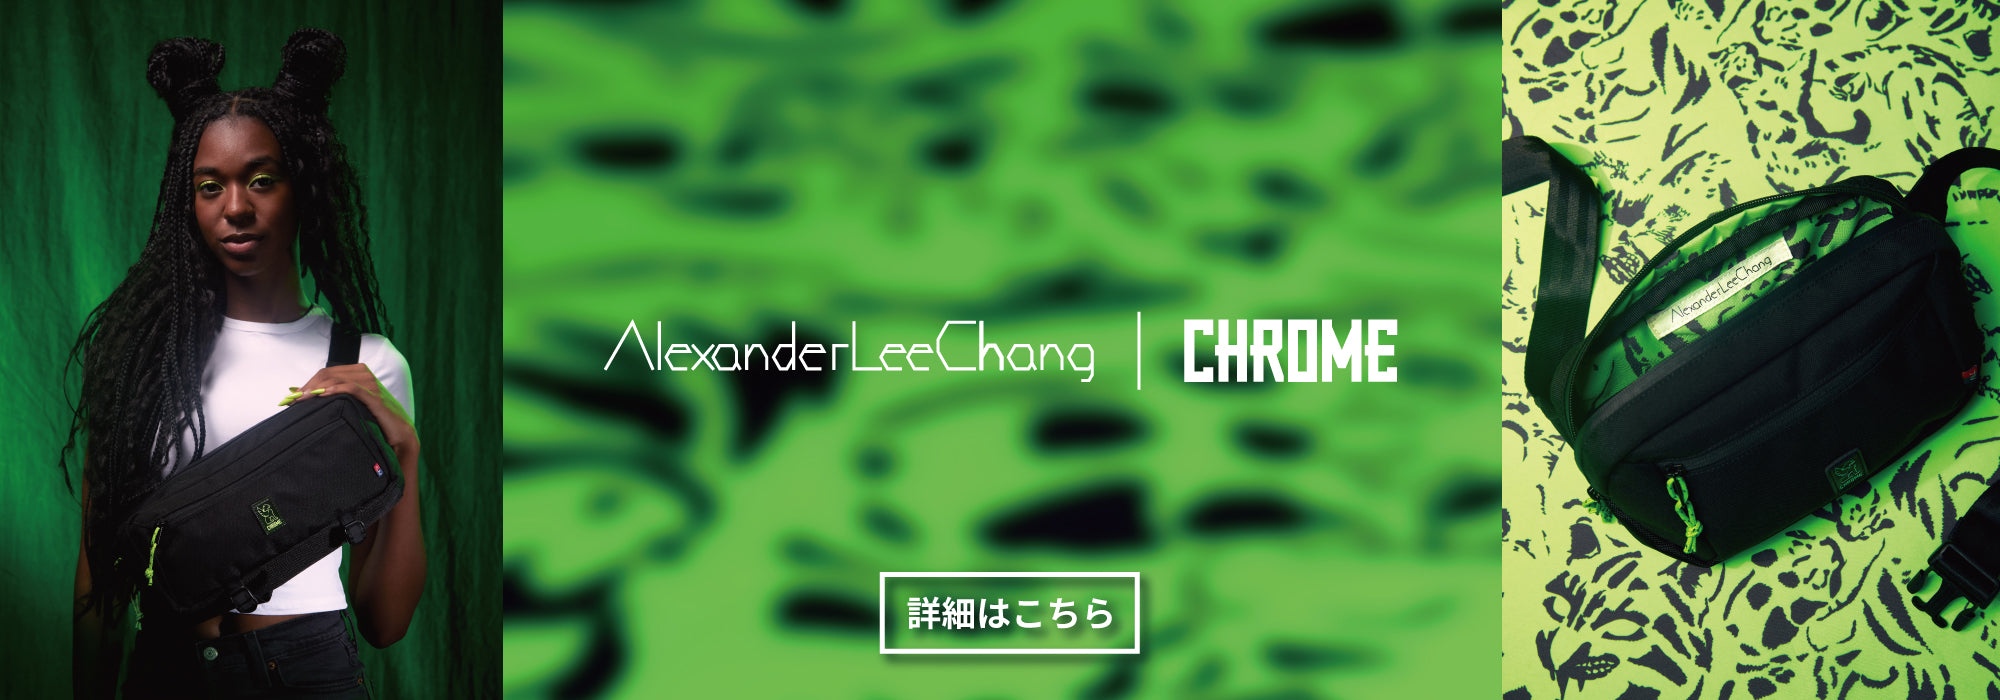 AlexanderLeeChang | CHROME GLOBAL EDITION IMG